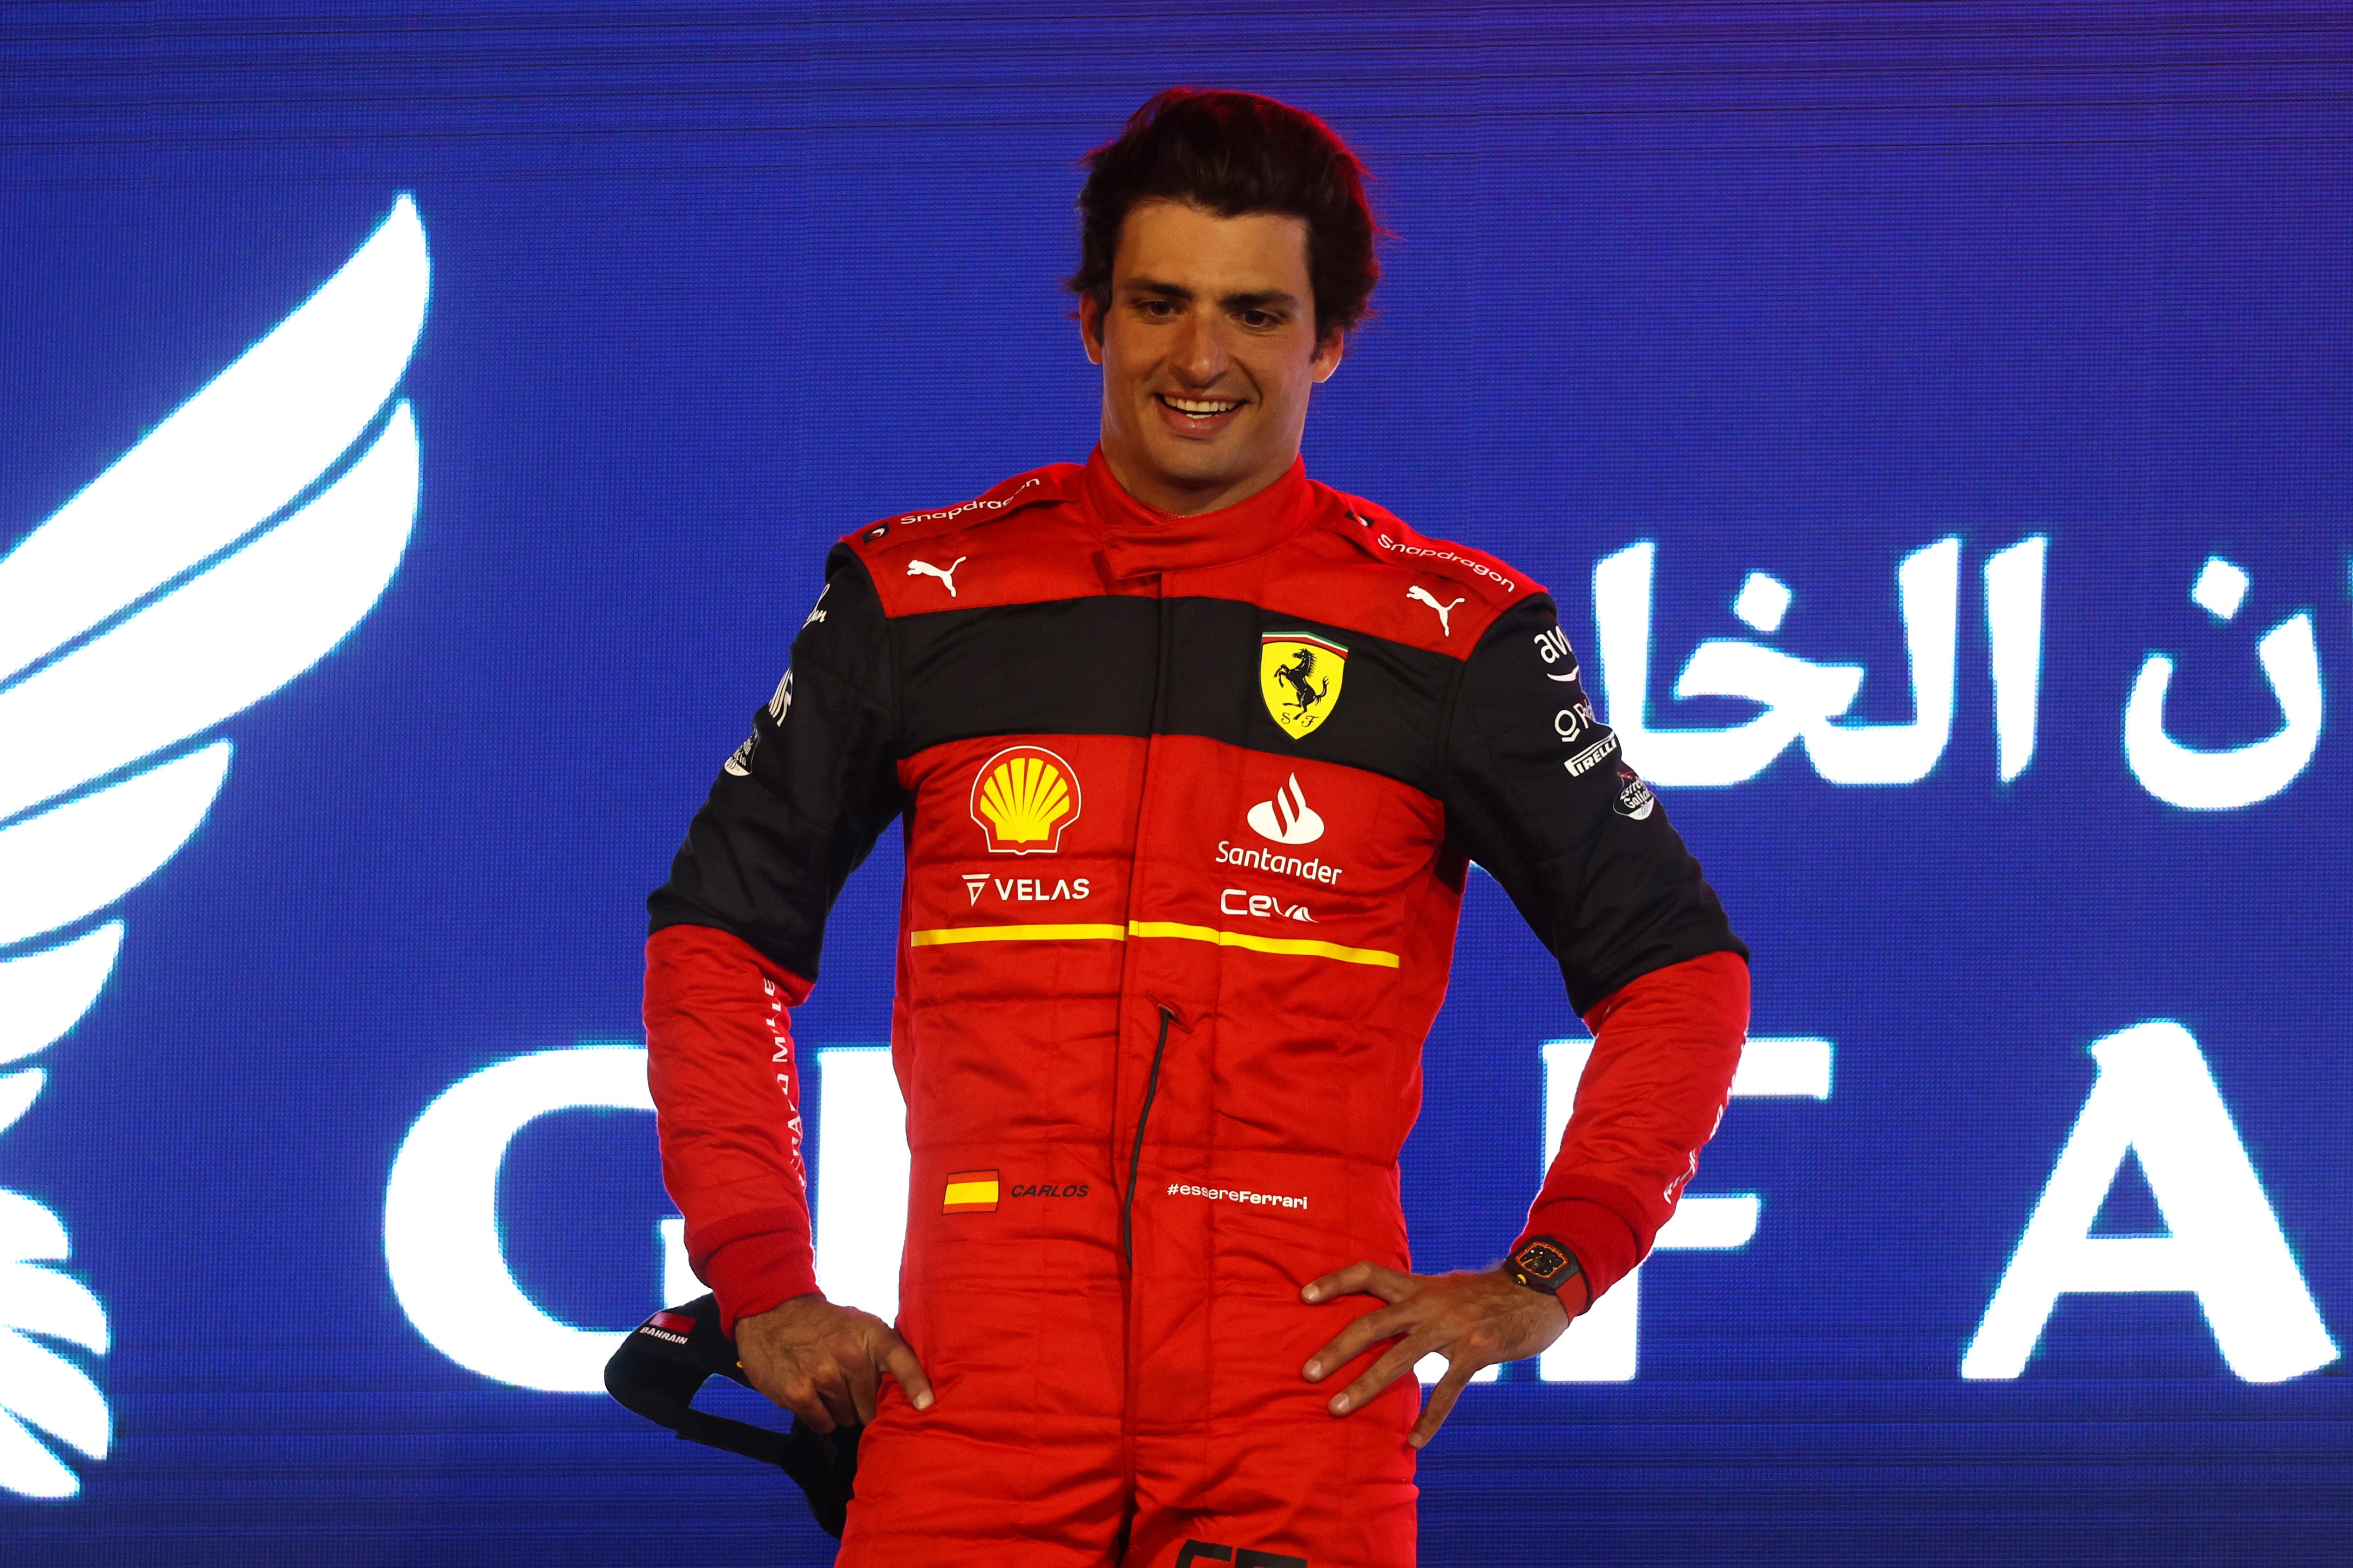 Carlos Sainz is in his second season at Ferrari